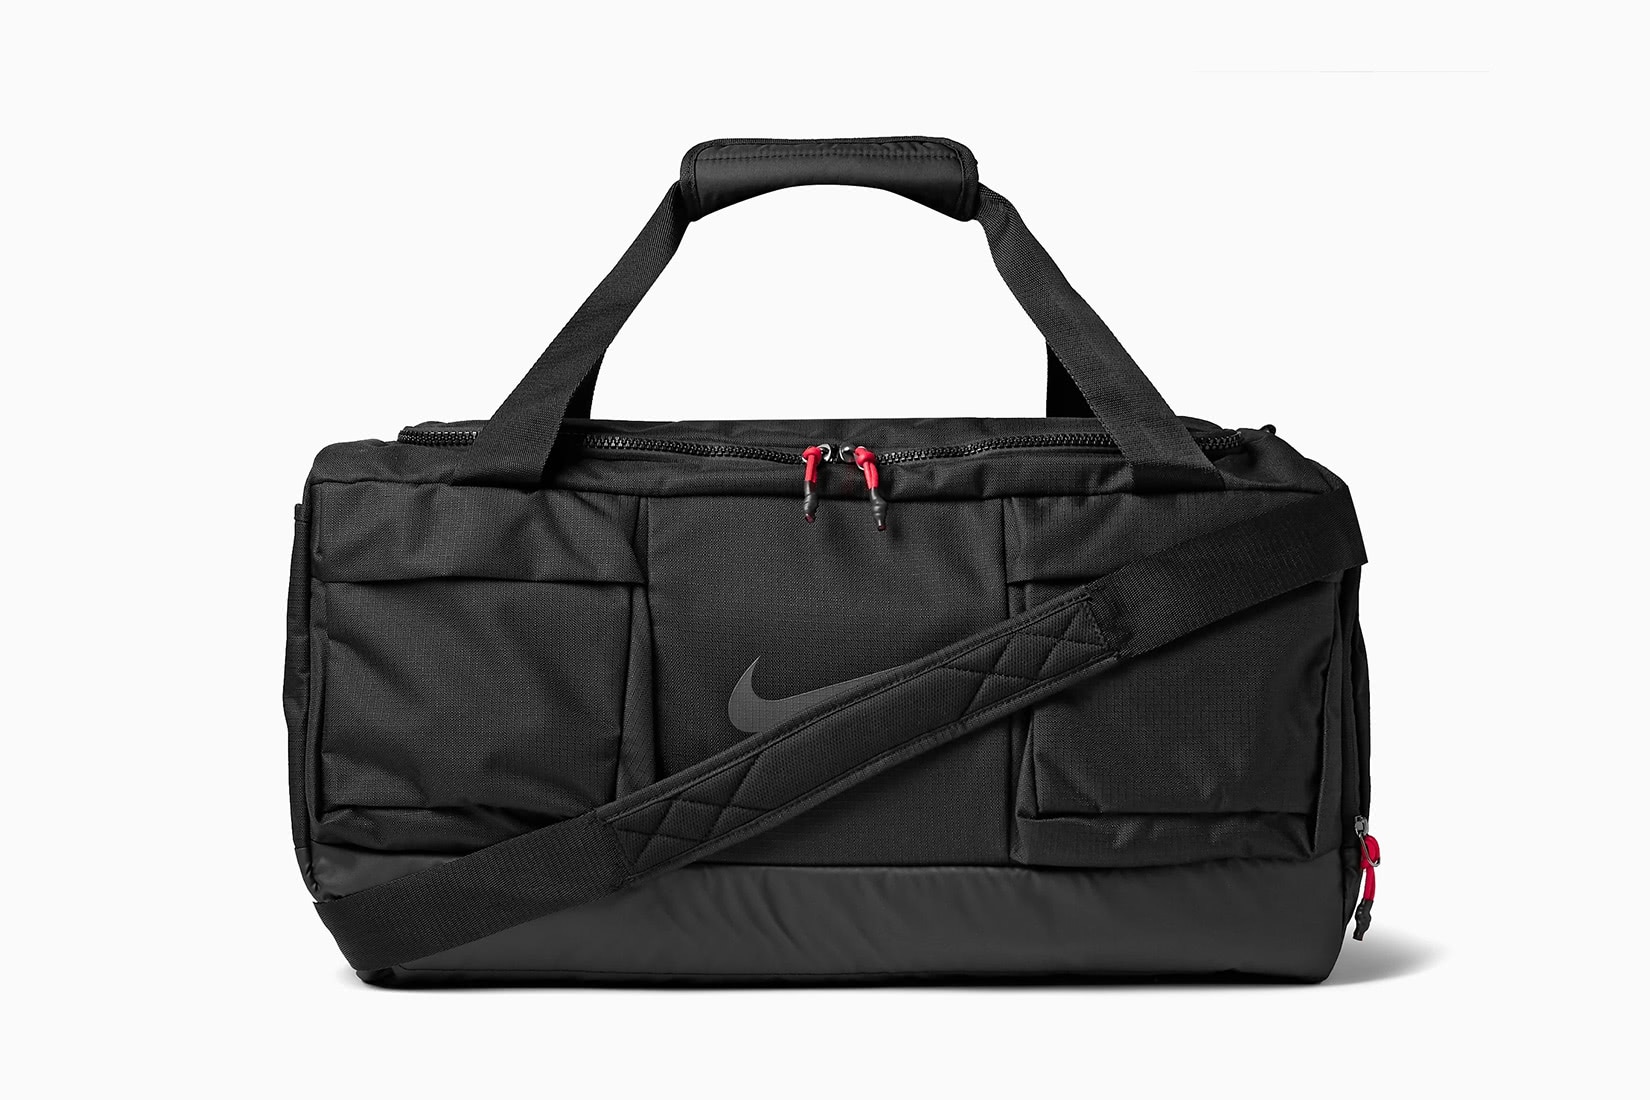 best duffel bags nike golf ripstop - Luxe Digital